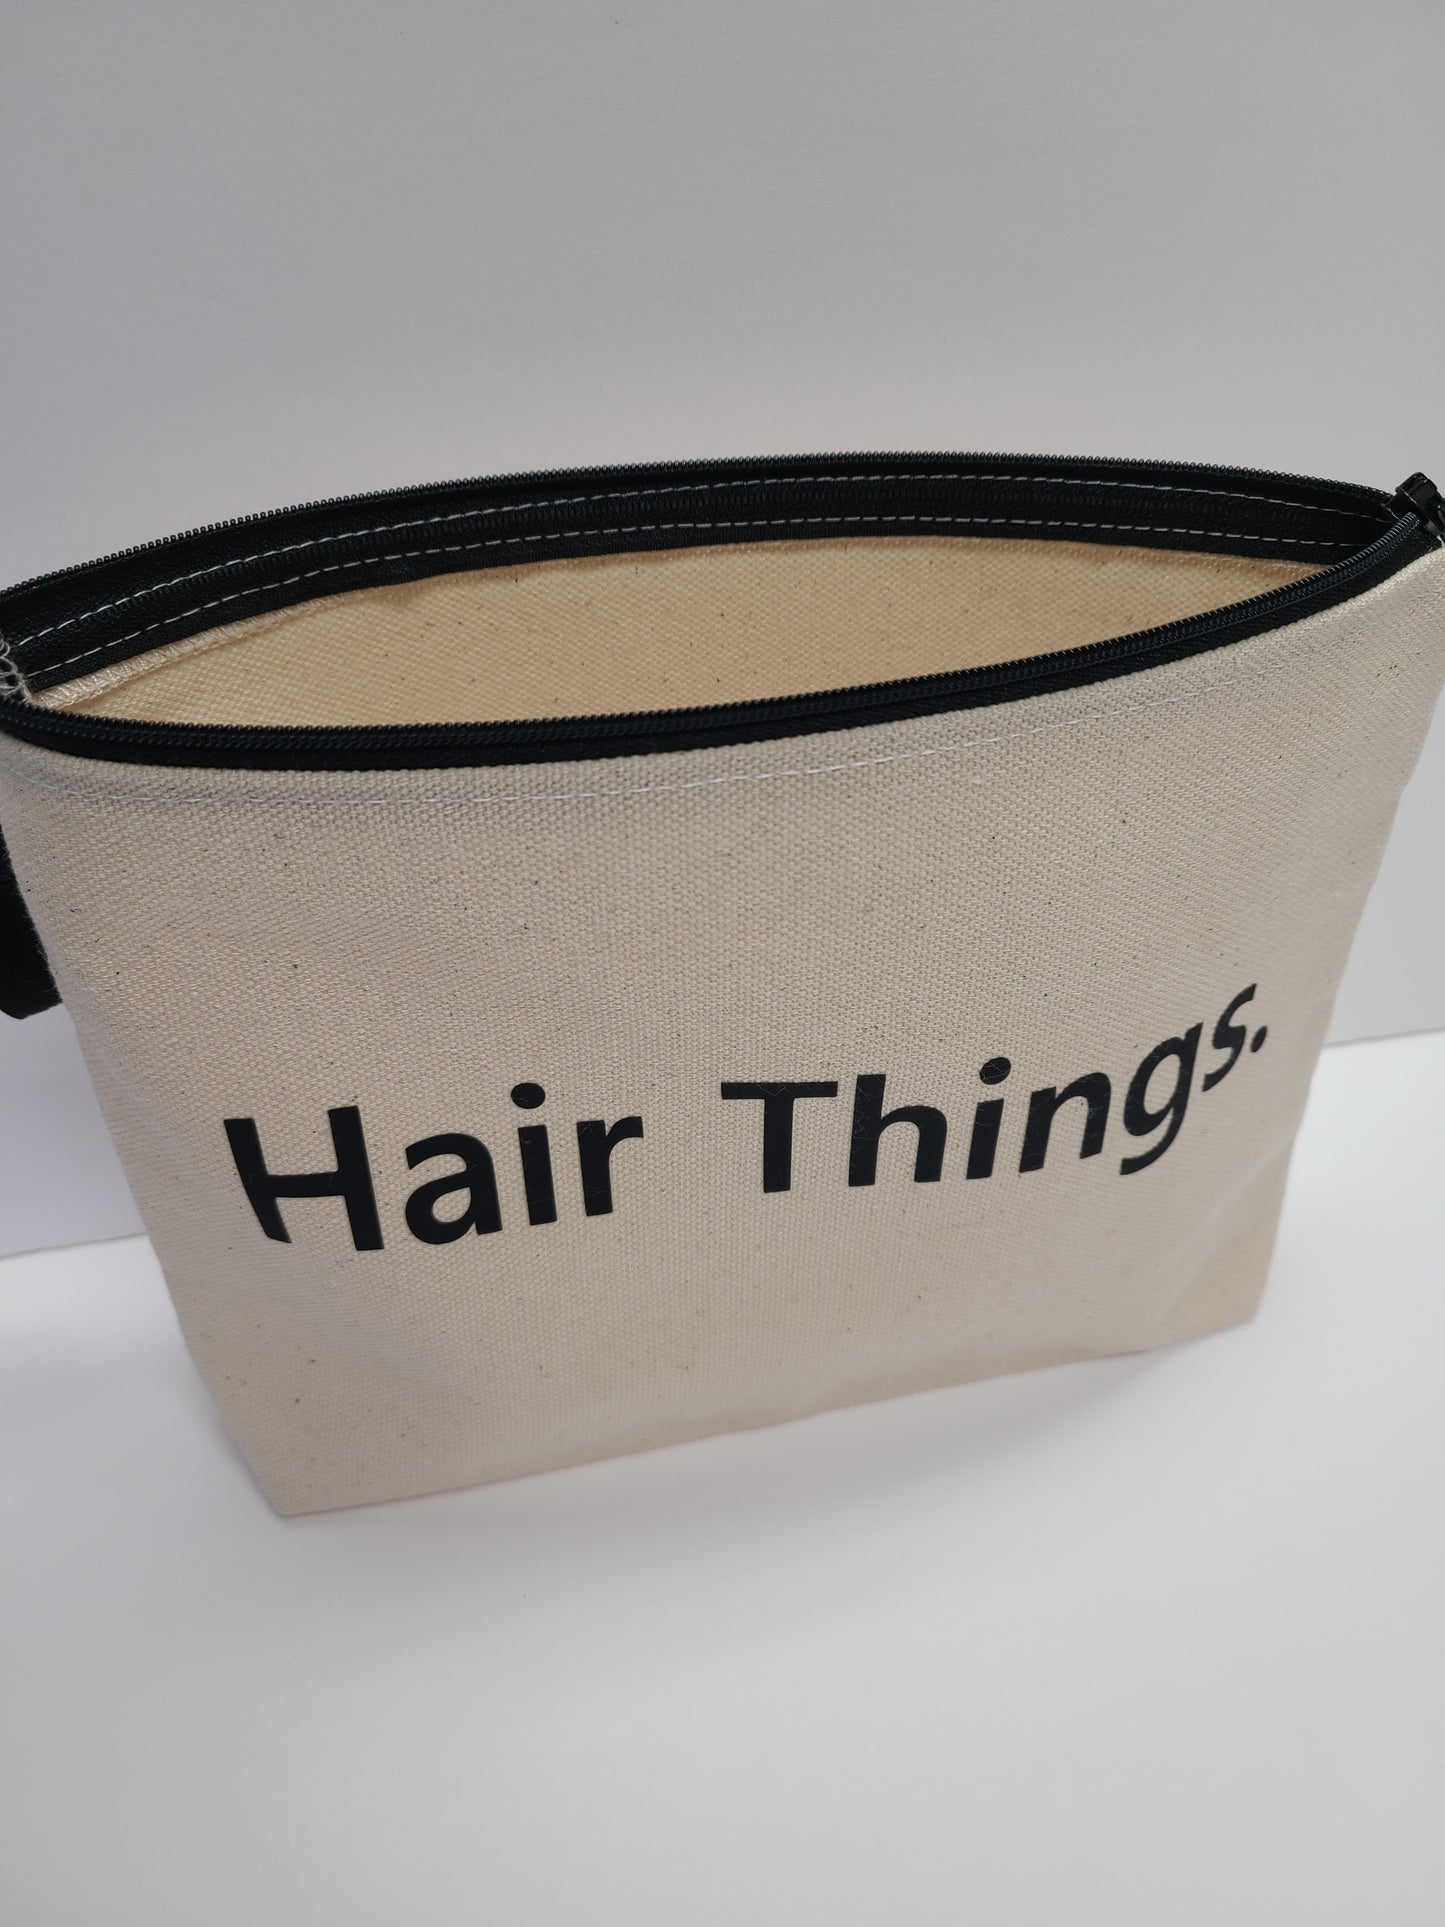 Hair Things small Travel Bag